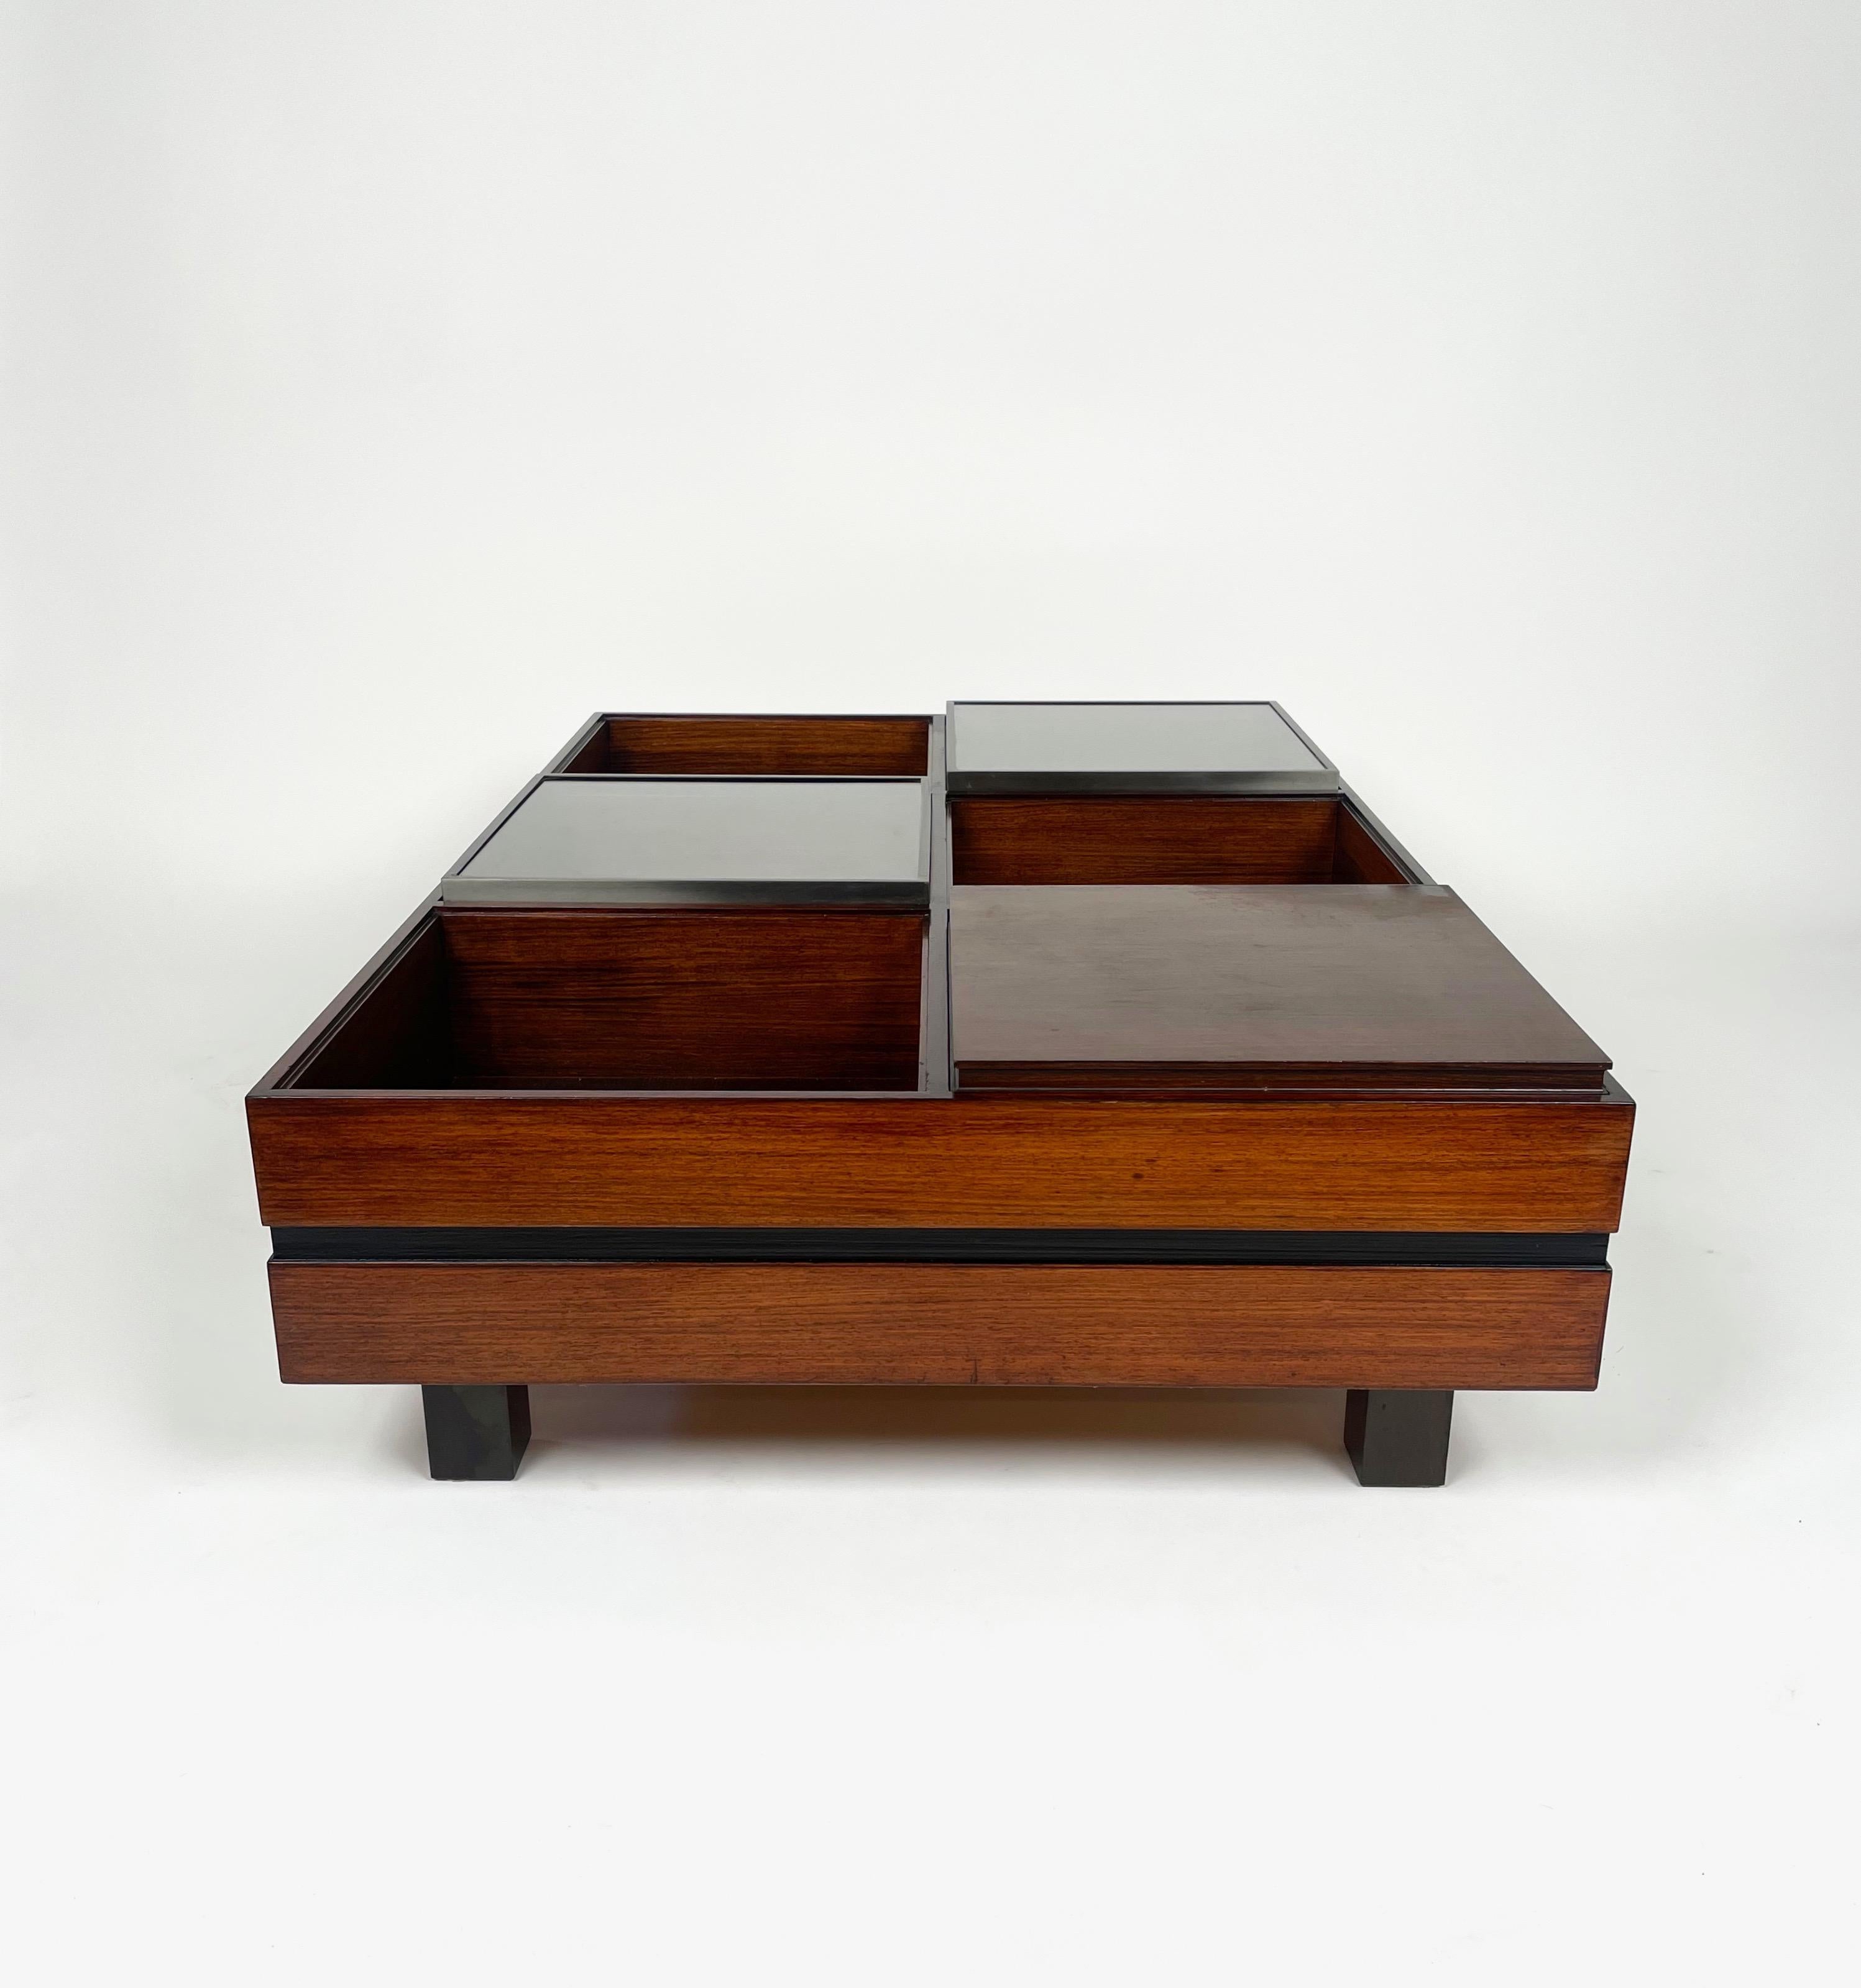 Luigi Sormani Rectangular Modular Coffee Table in Wood and Glass, Italy, 1960s For Sale 6